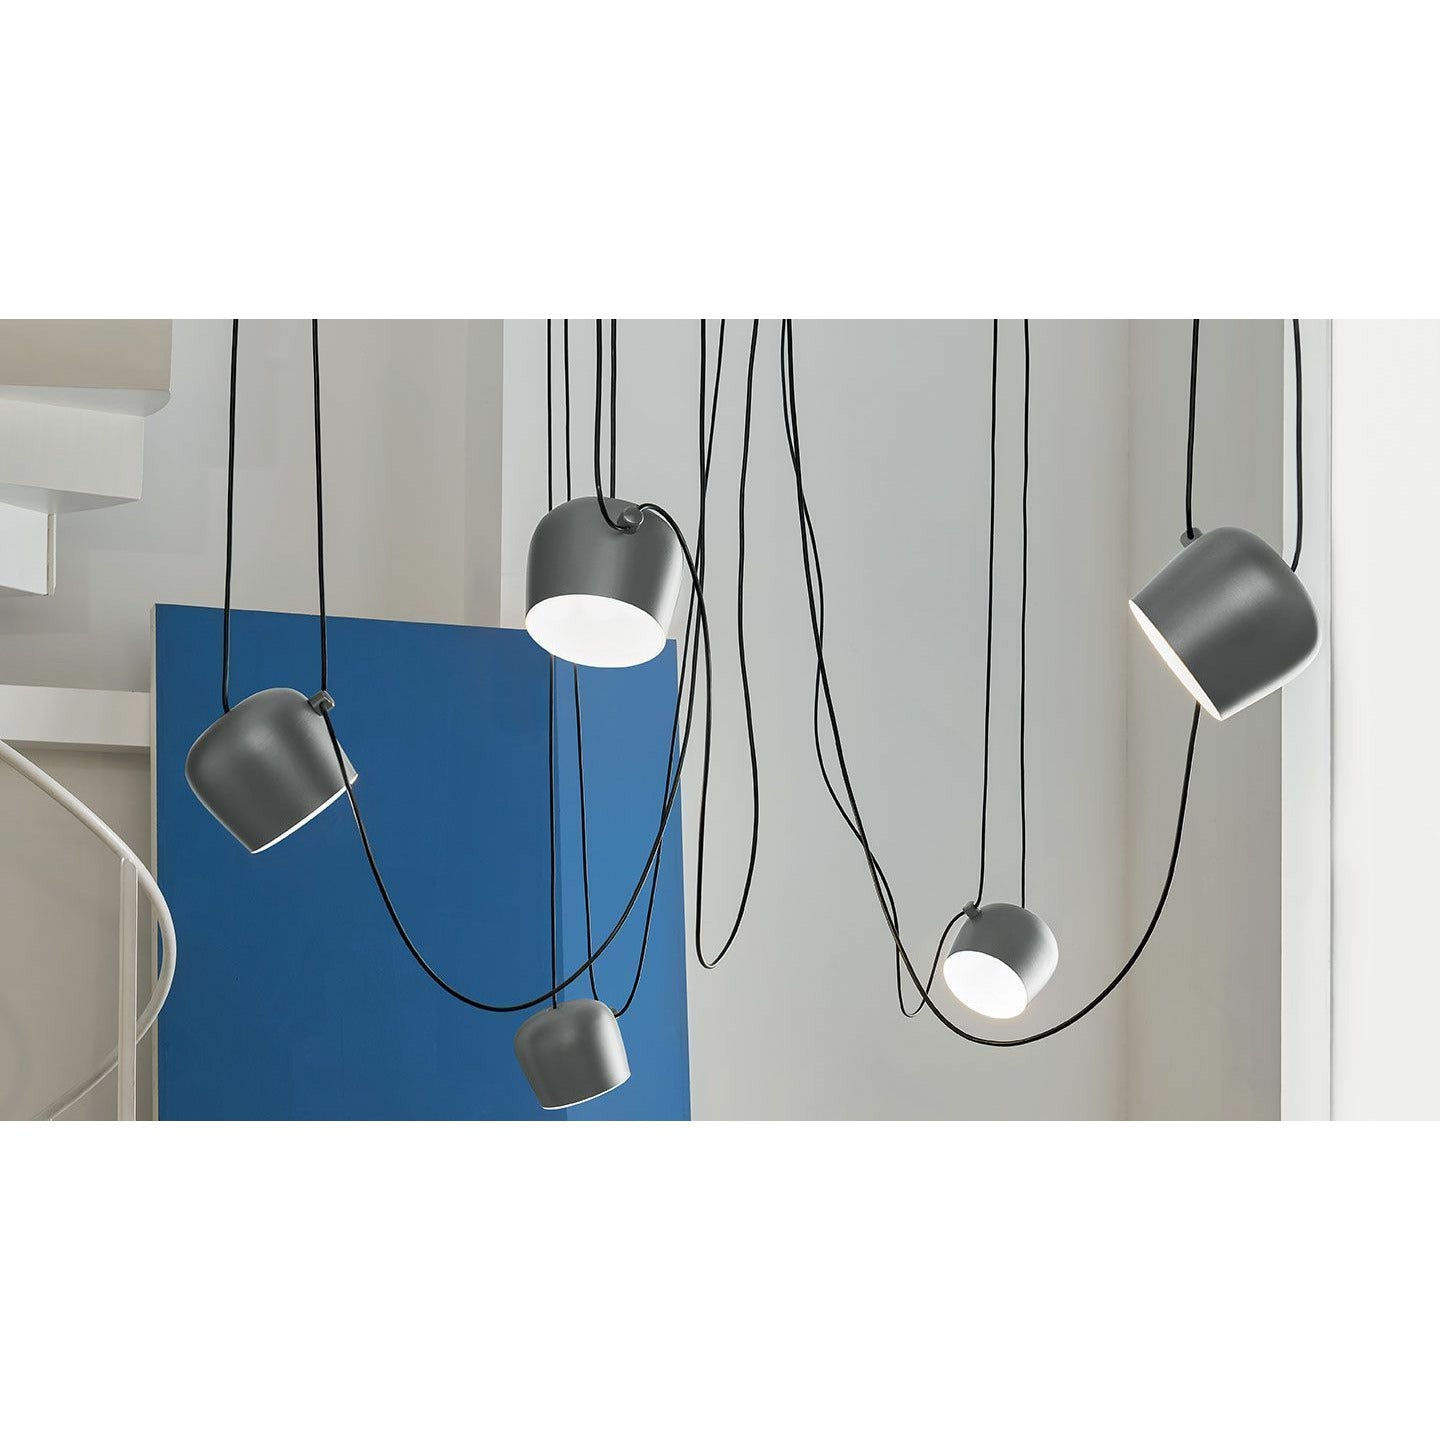 Flos Appo -led hanger lamp, wit